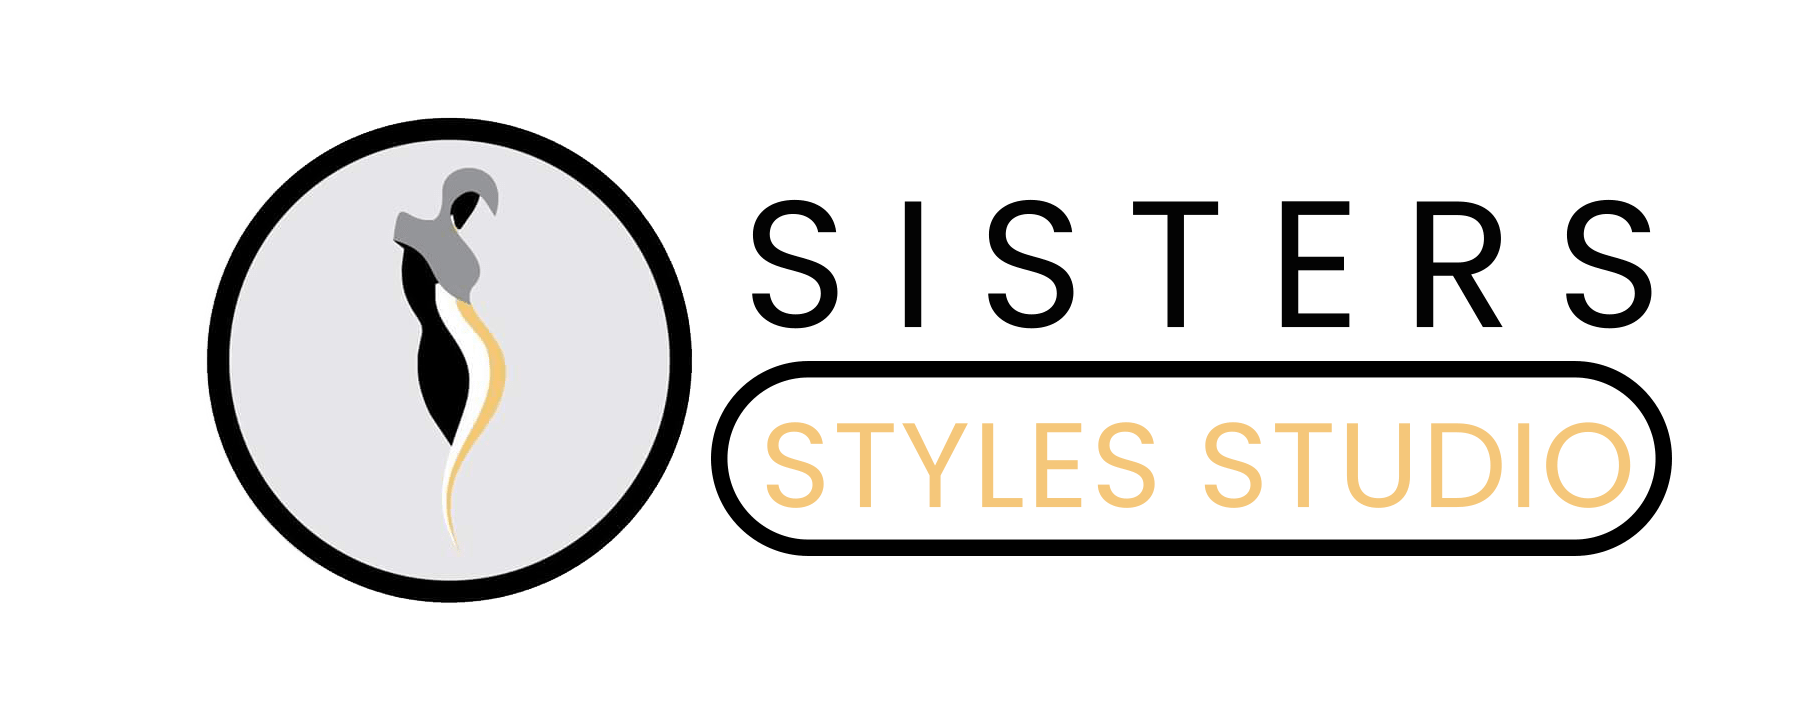 sisters style studios